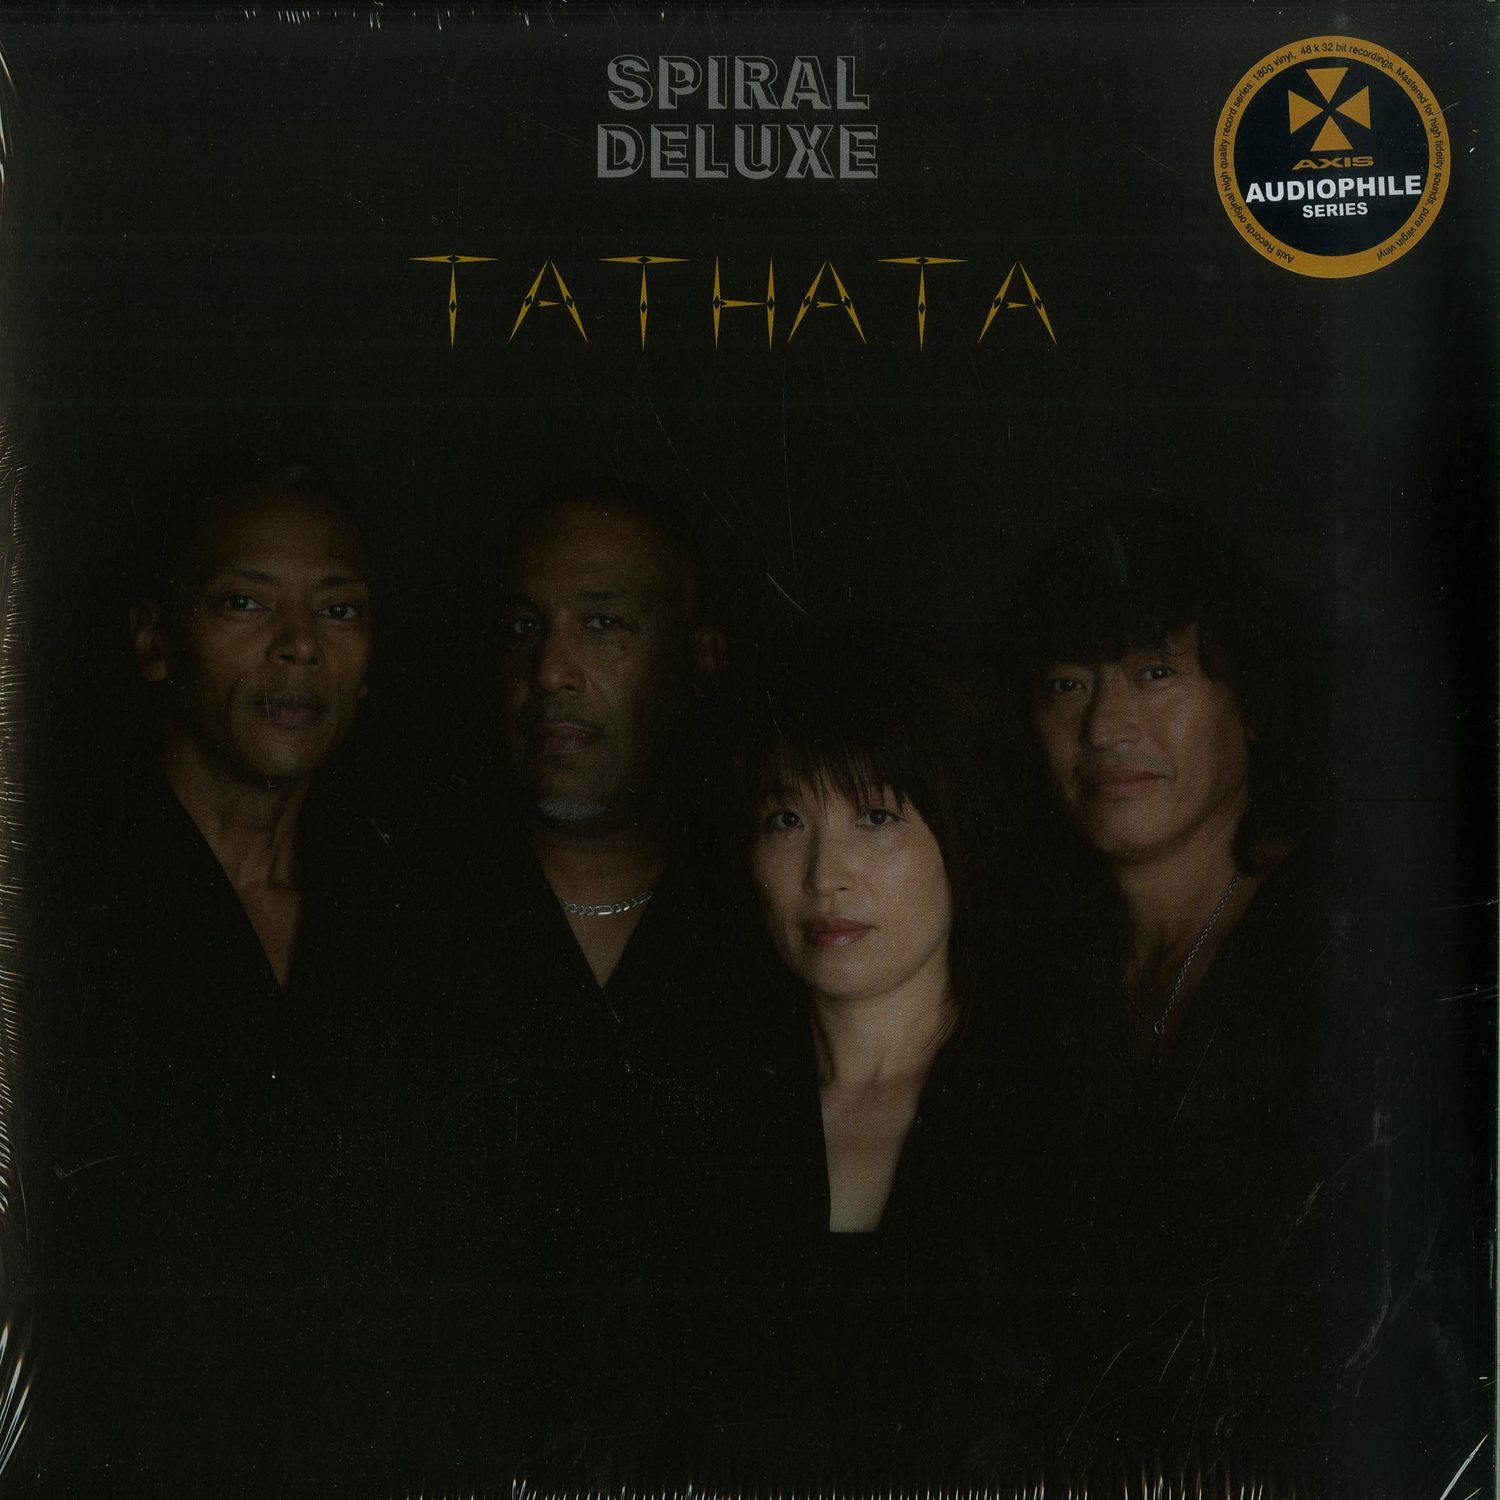 Spiral Deluxe  - TATHATA 